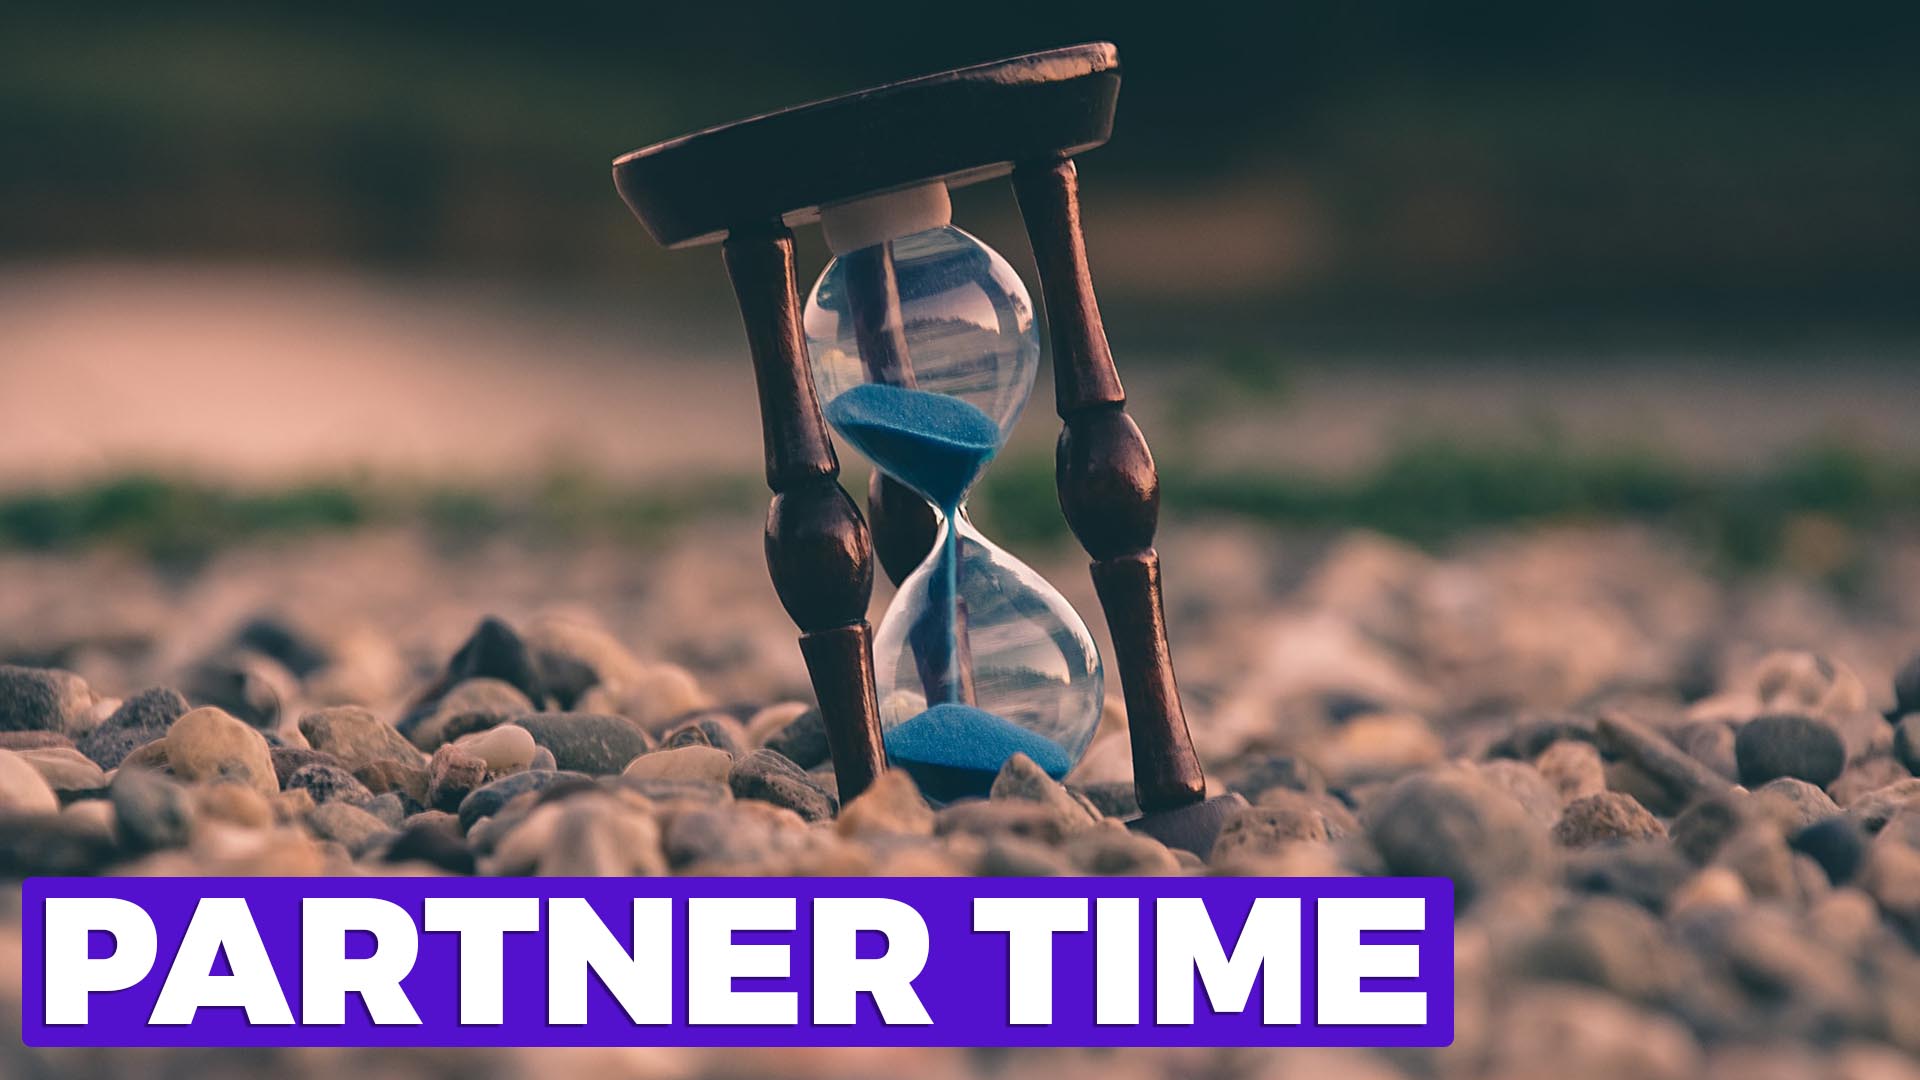 Free Up Partner Time – Brad Turville